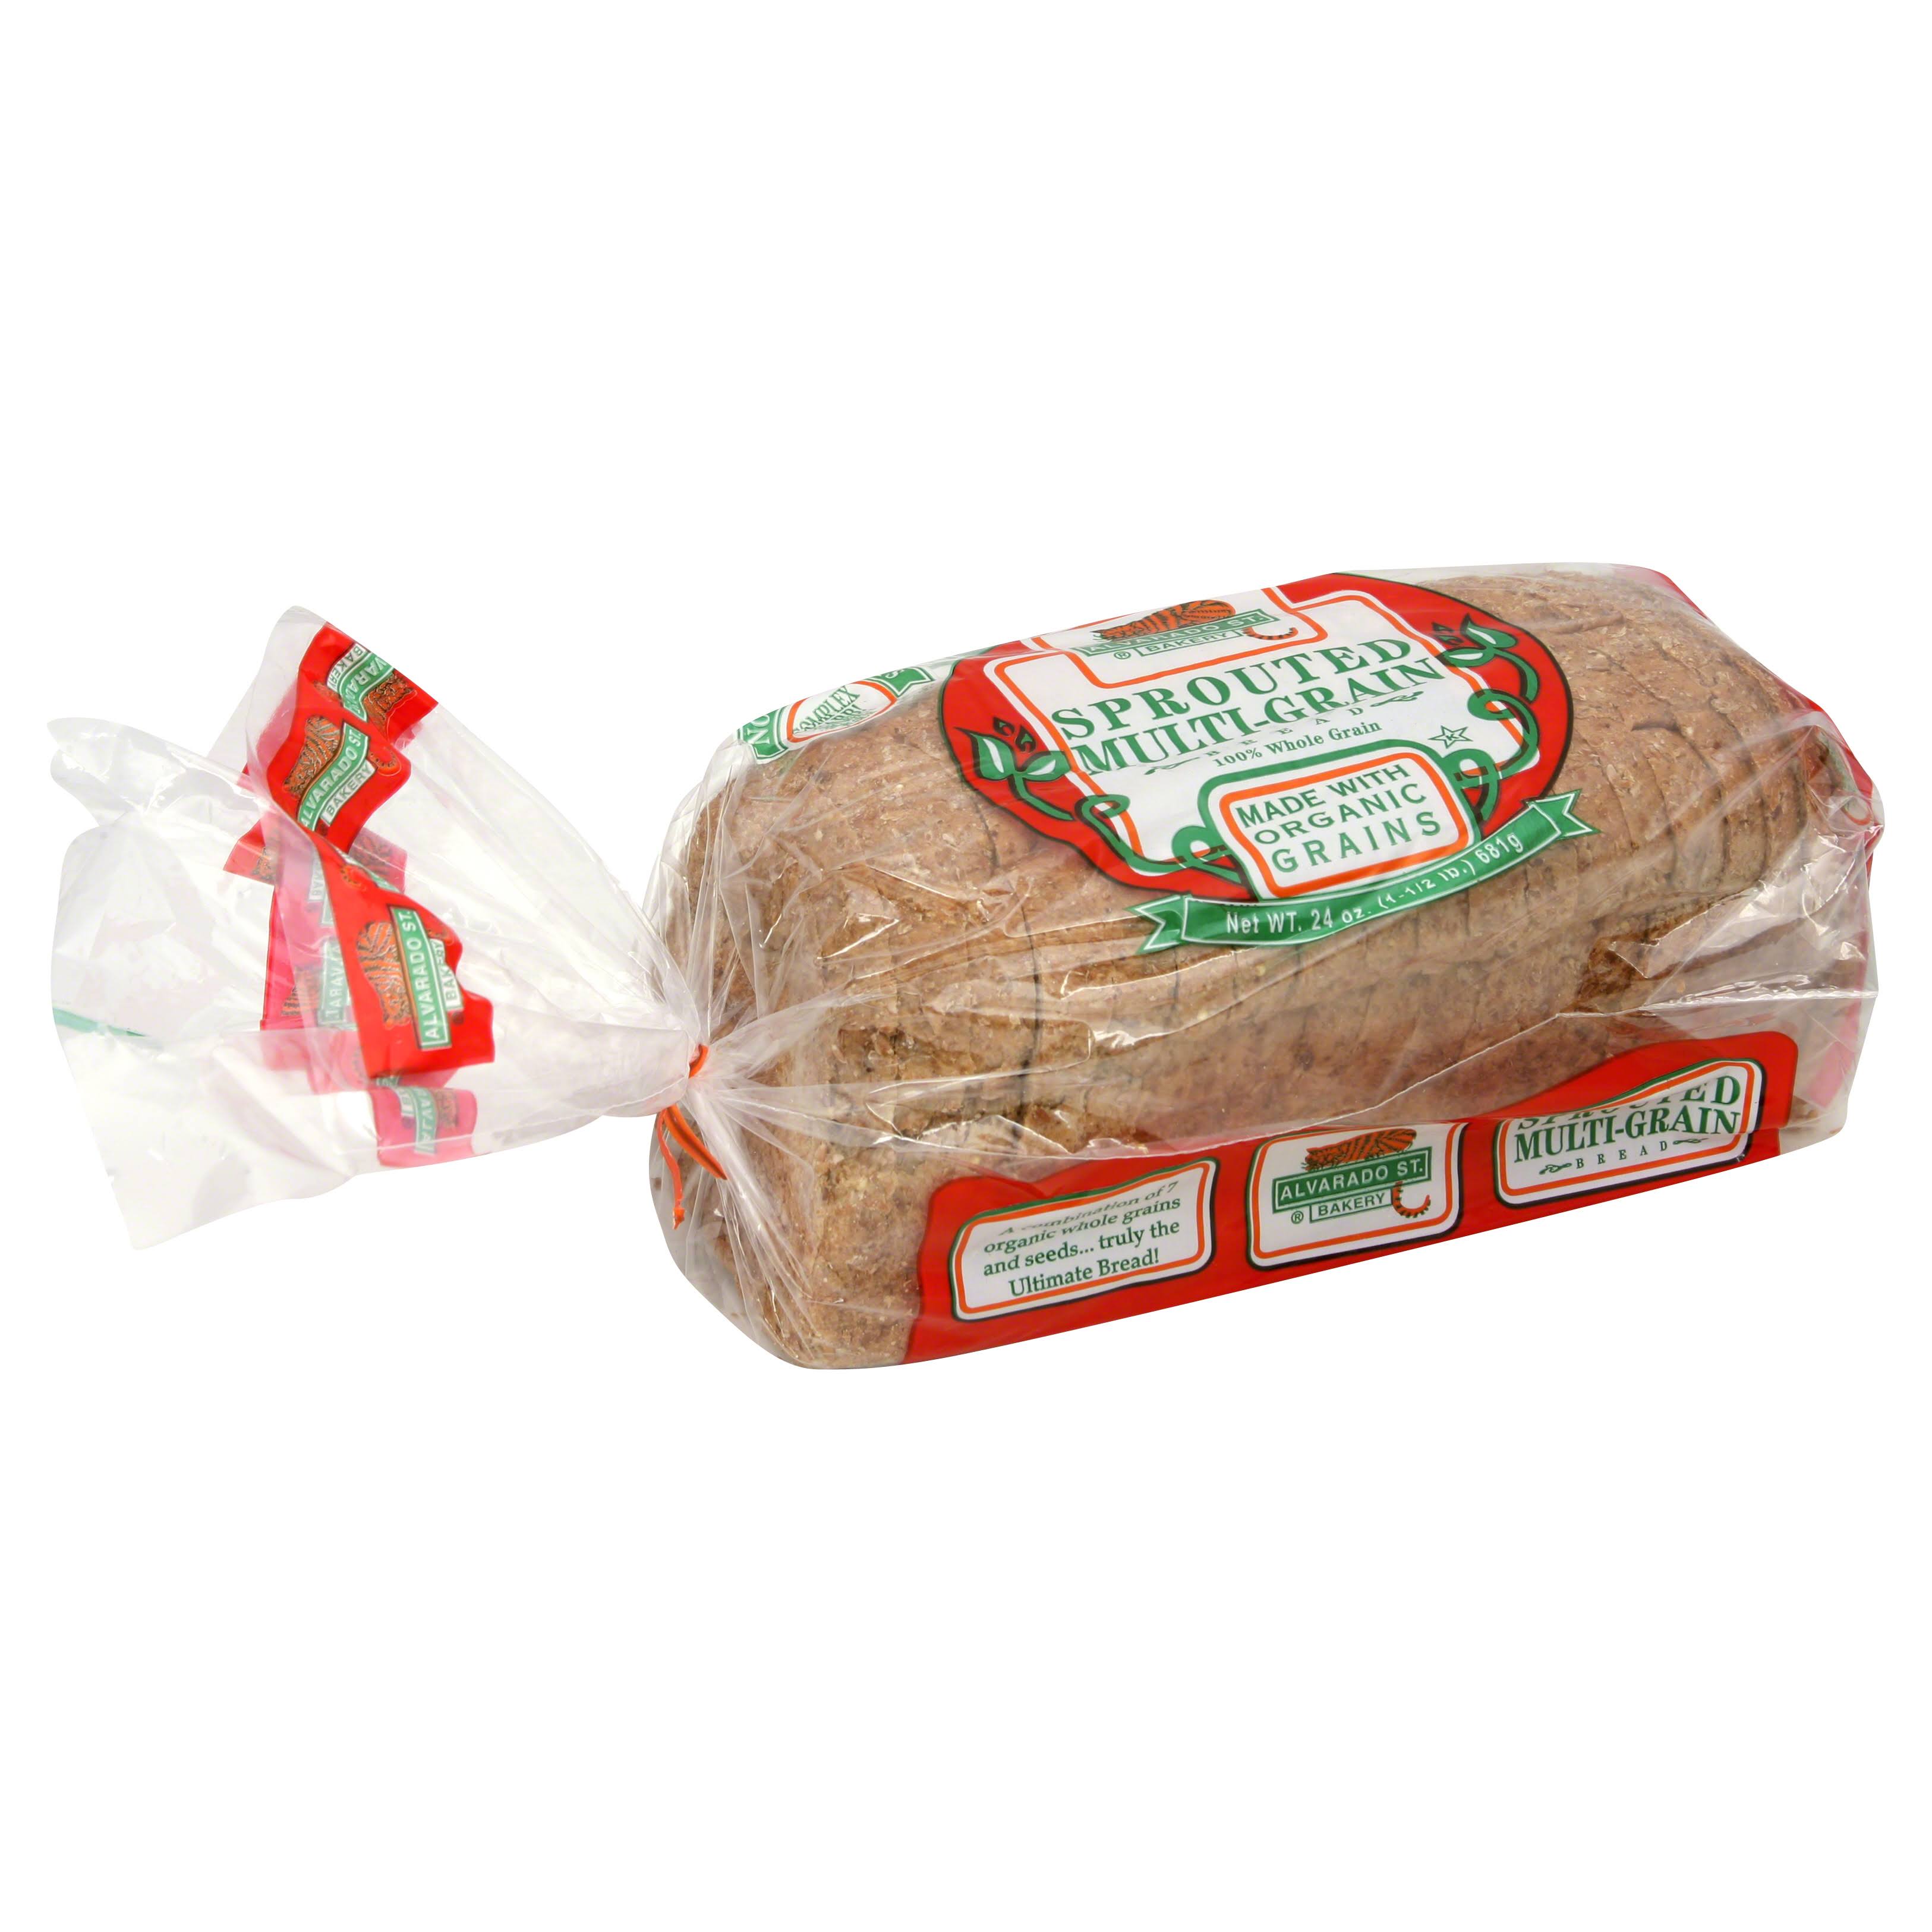 Alvarado St Bakery Sprouted Multi Grain Bread - 24oz